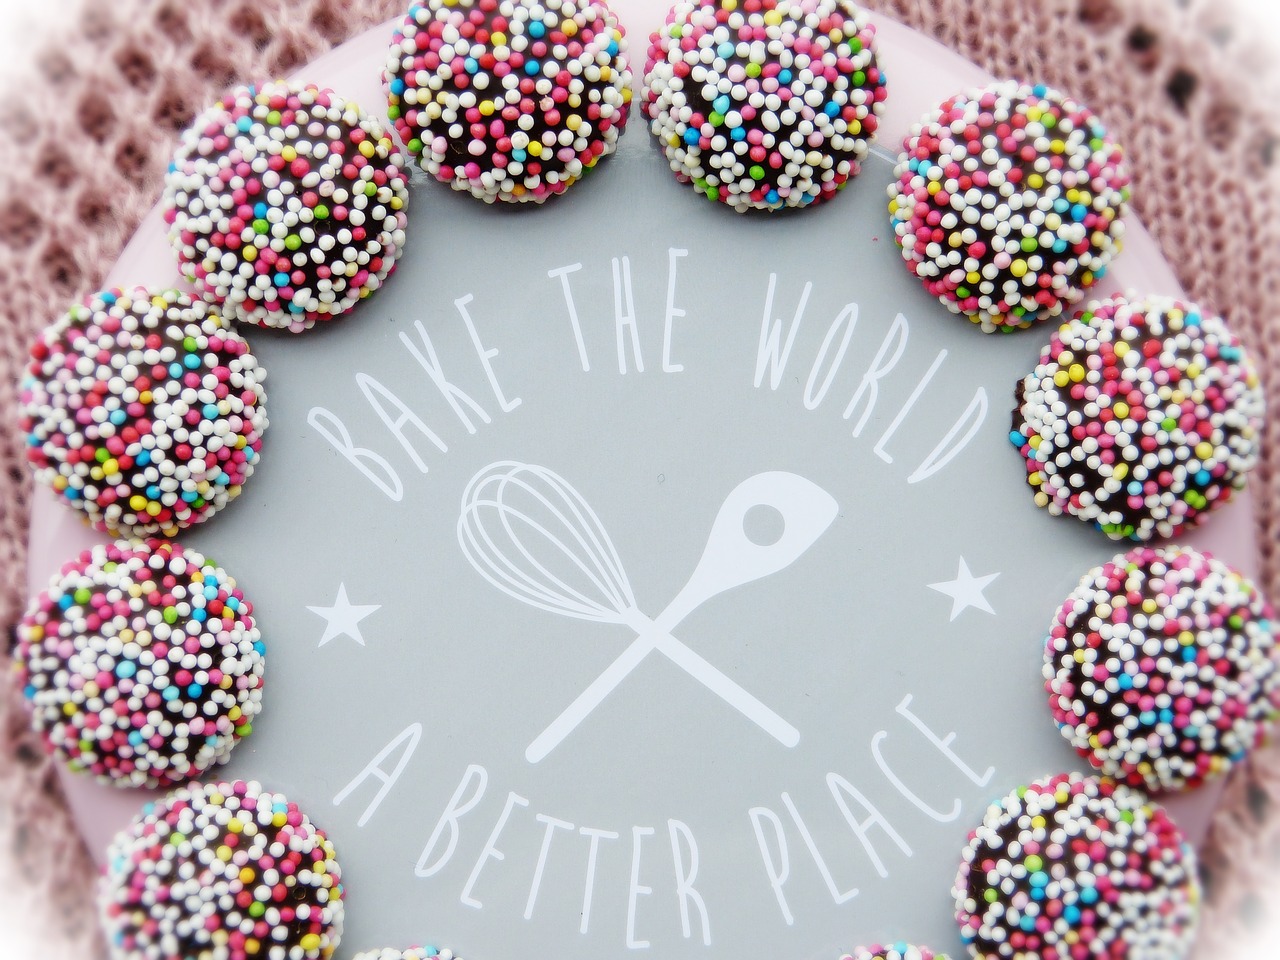 bake motto world free photo